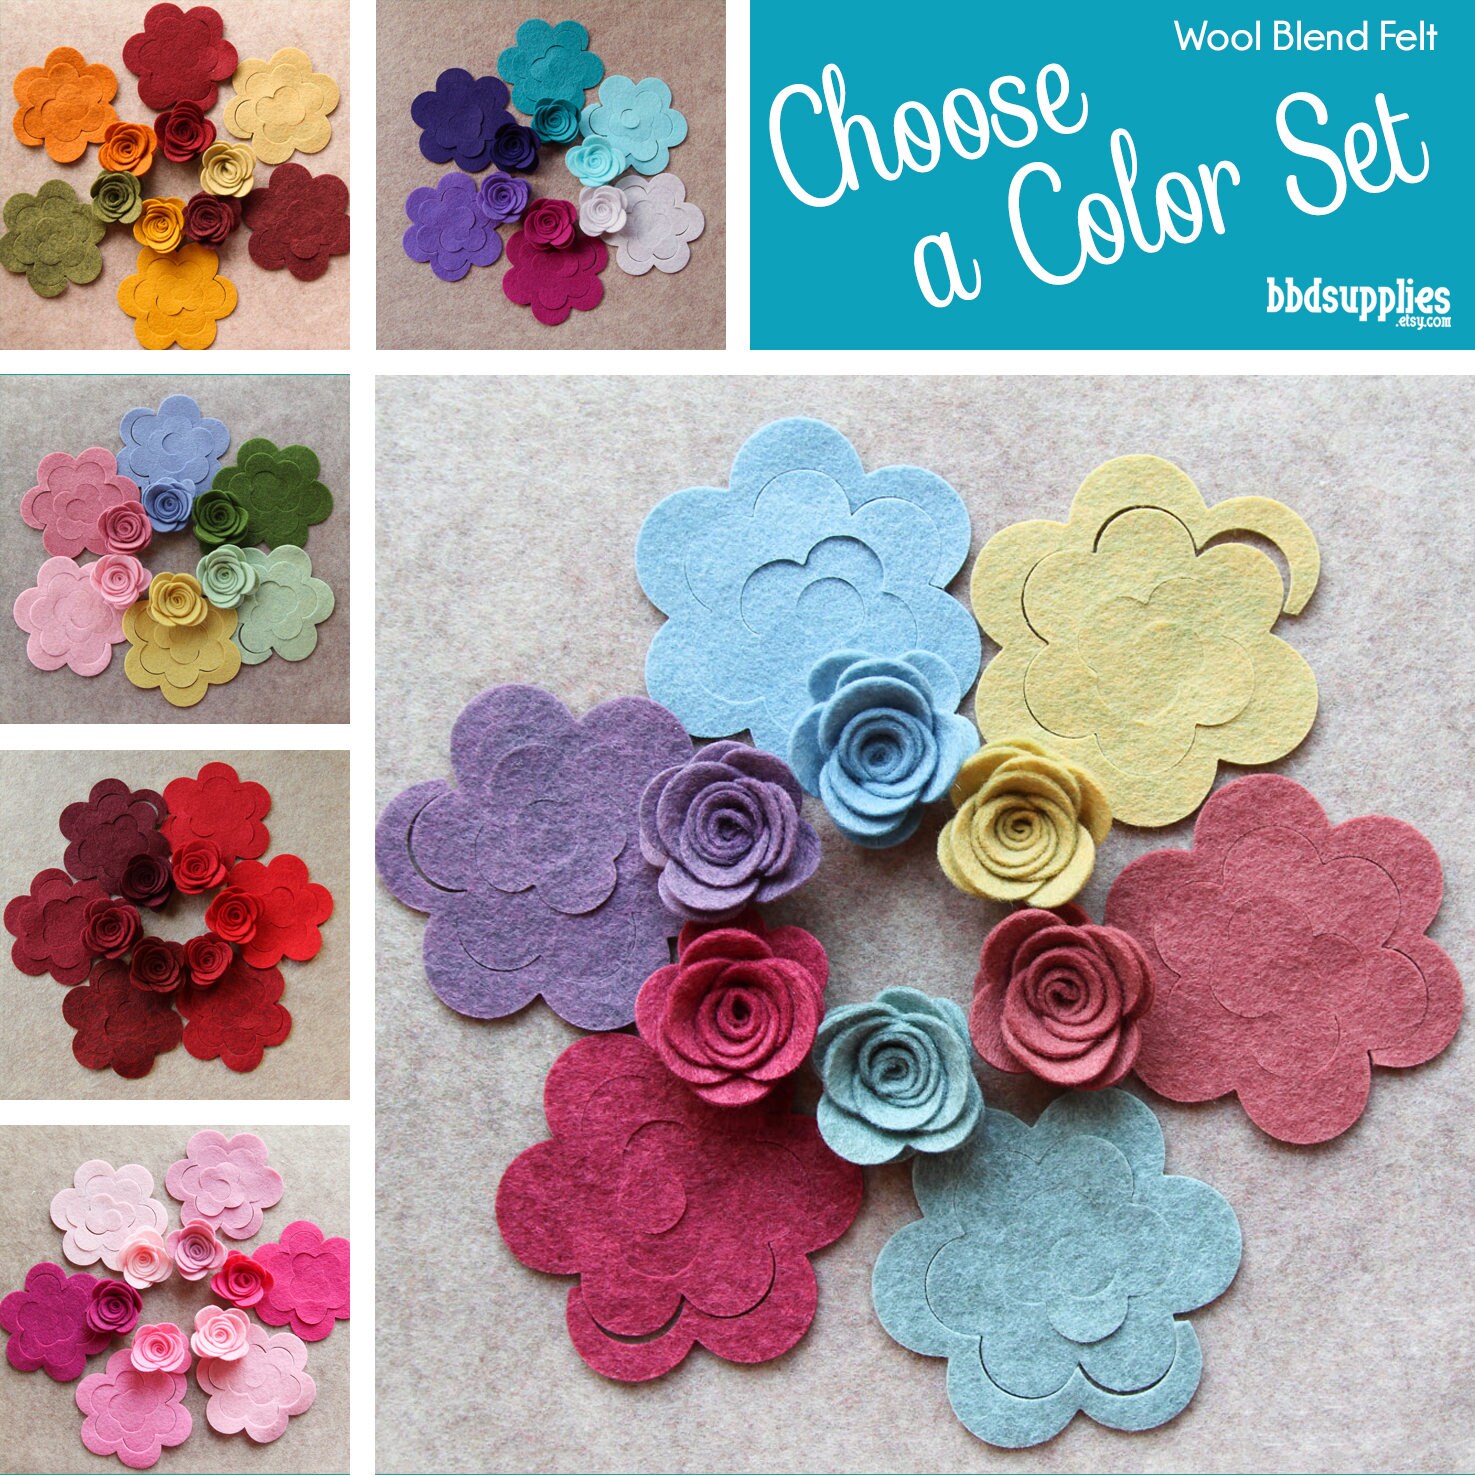 Wool Blend Felt Flowers | 12 Medium 3D Rolled Roses Pick A Color Set Diy Unassembled Rosettes